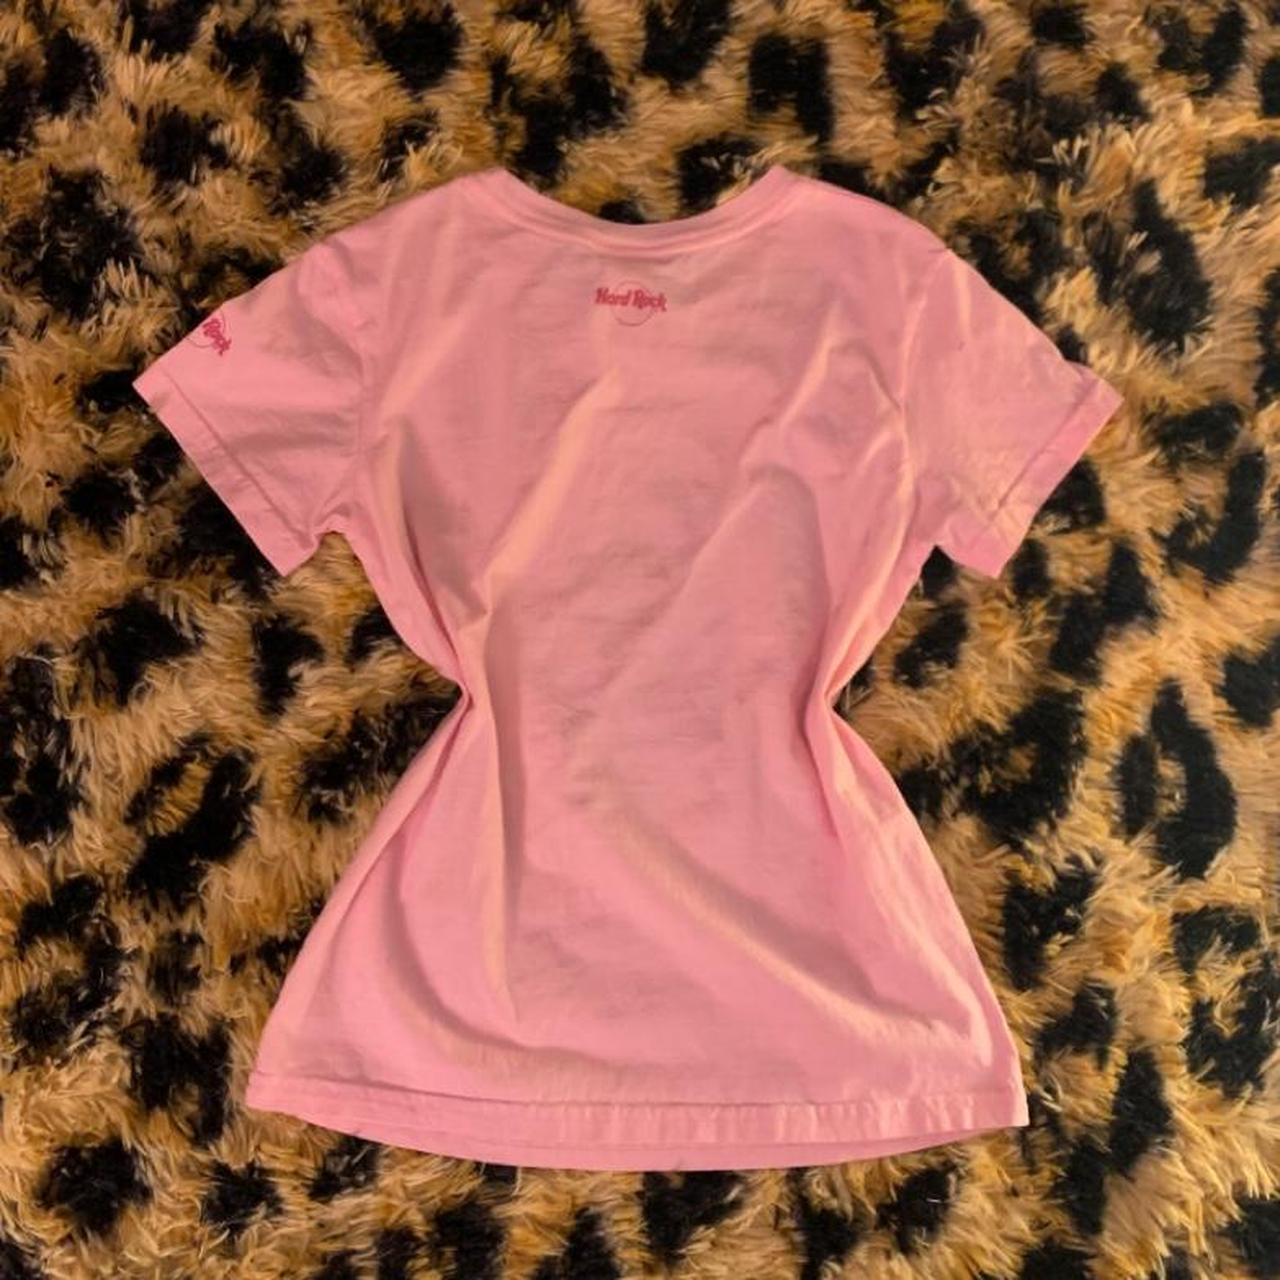 Hard Rock Cafe Women's Pink T-shirt (2)